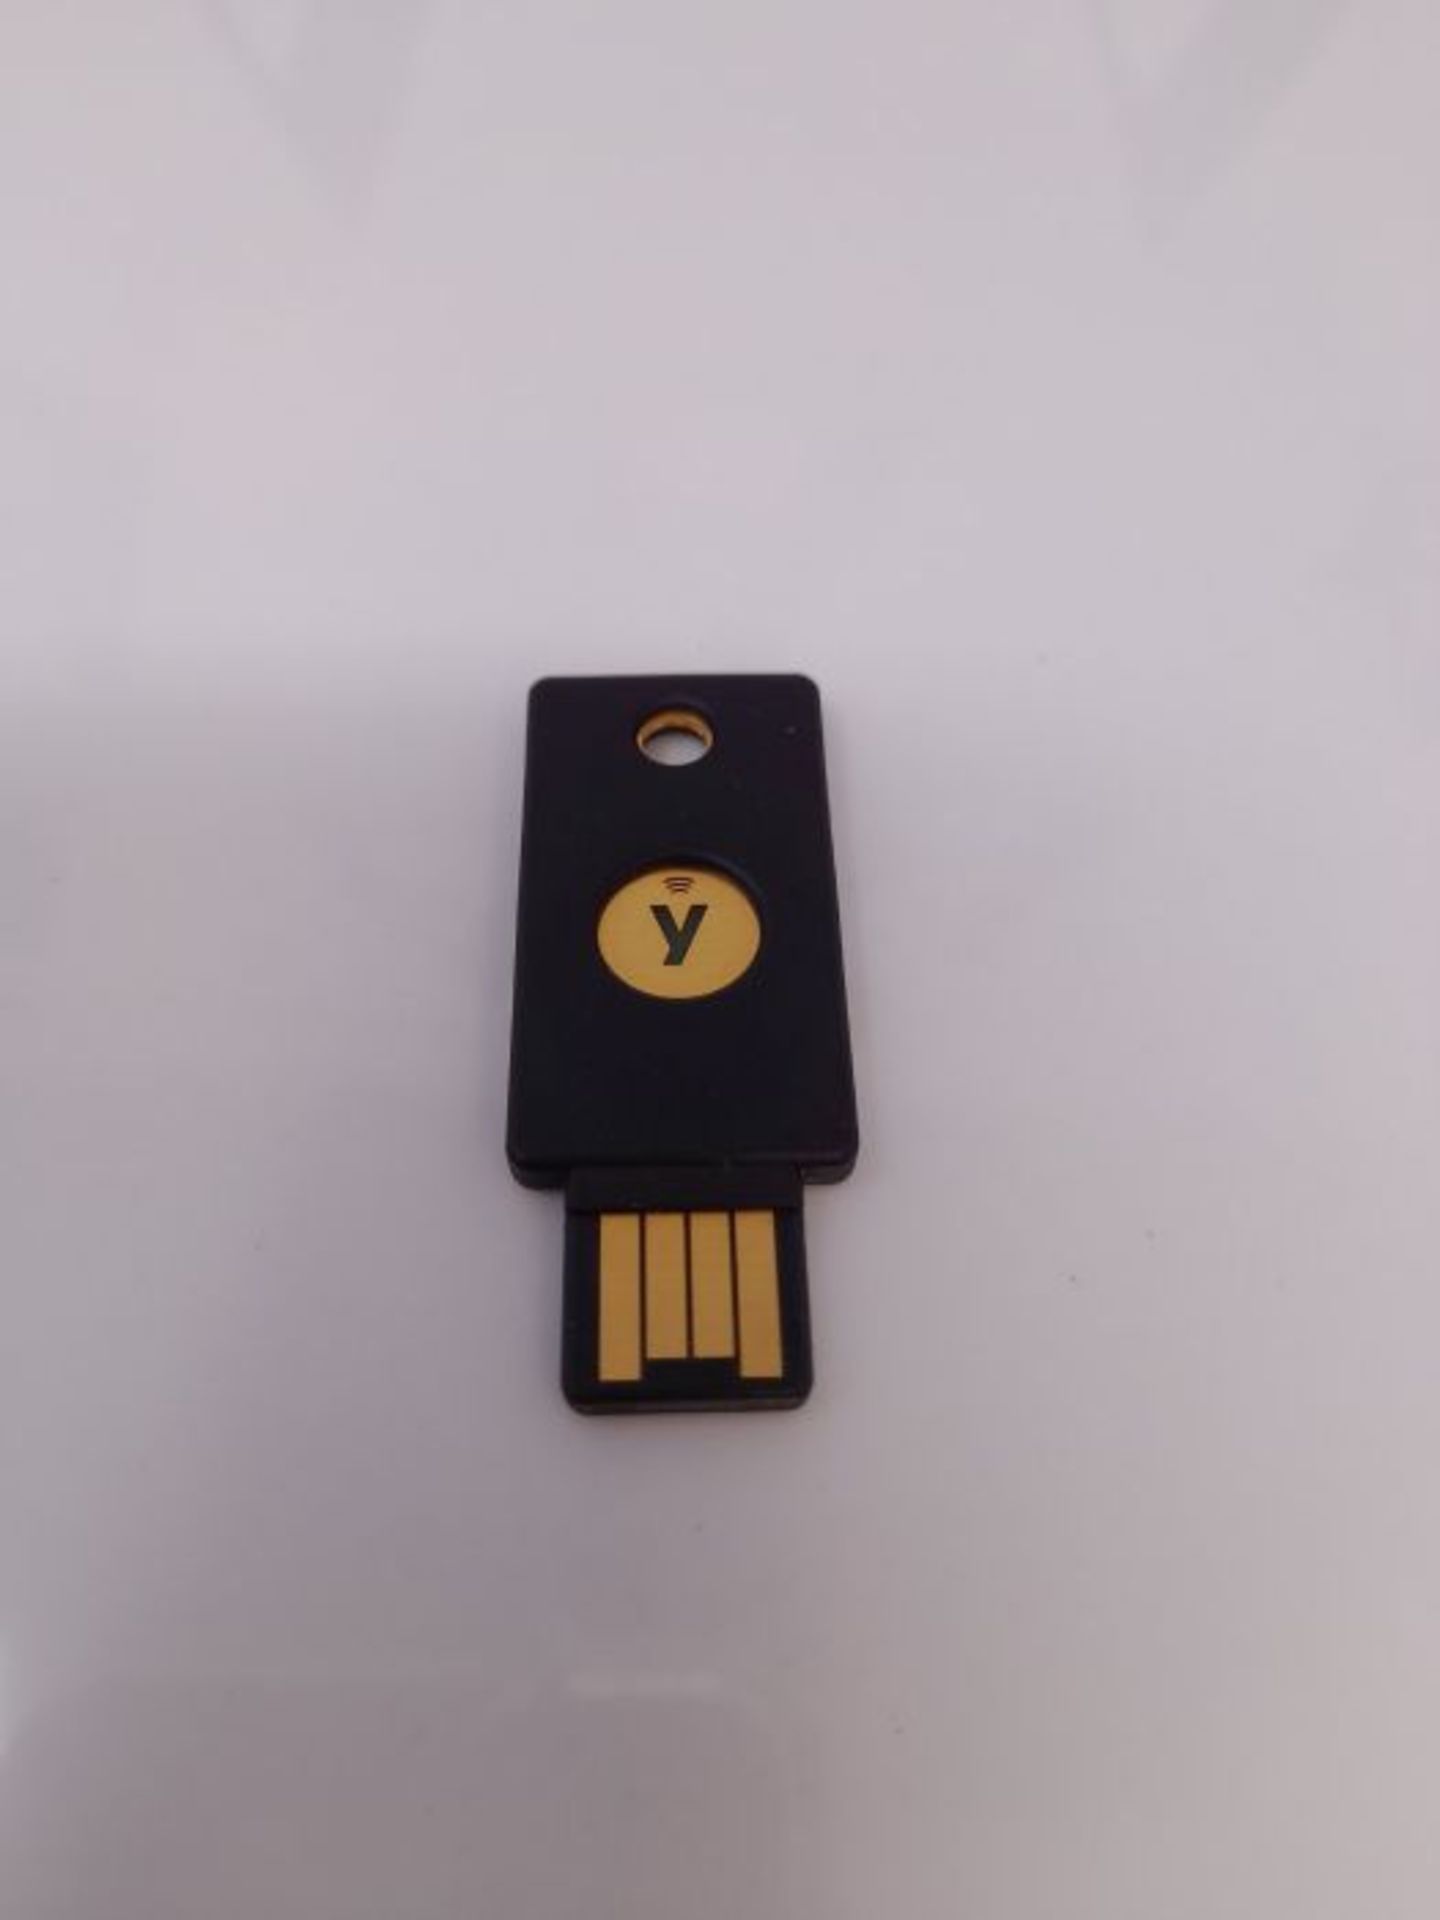 Yubico YubiKey 5 NFC, 2 Pasos de autenticaciÃ³n USB y NFC Security Key, Compatible c - Image 2 of 2